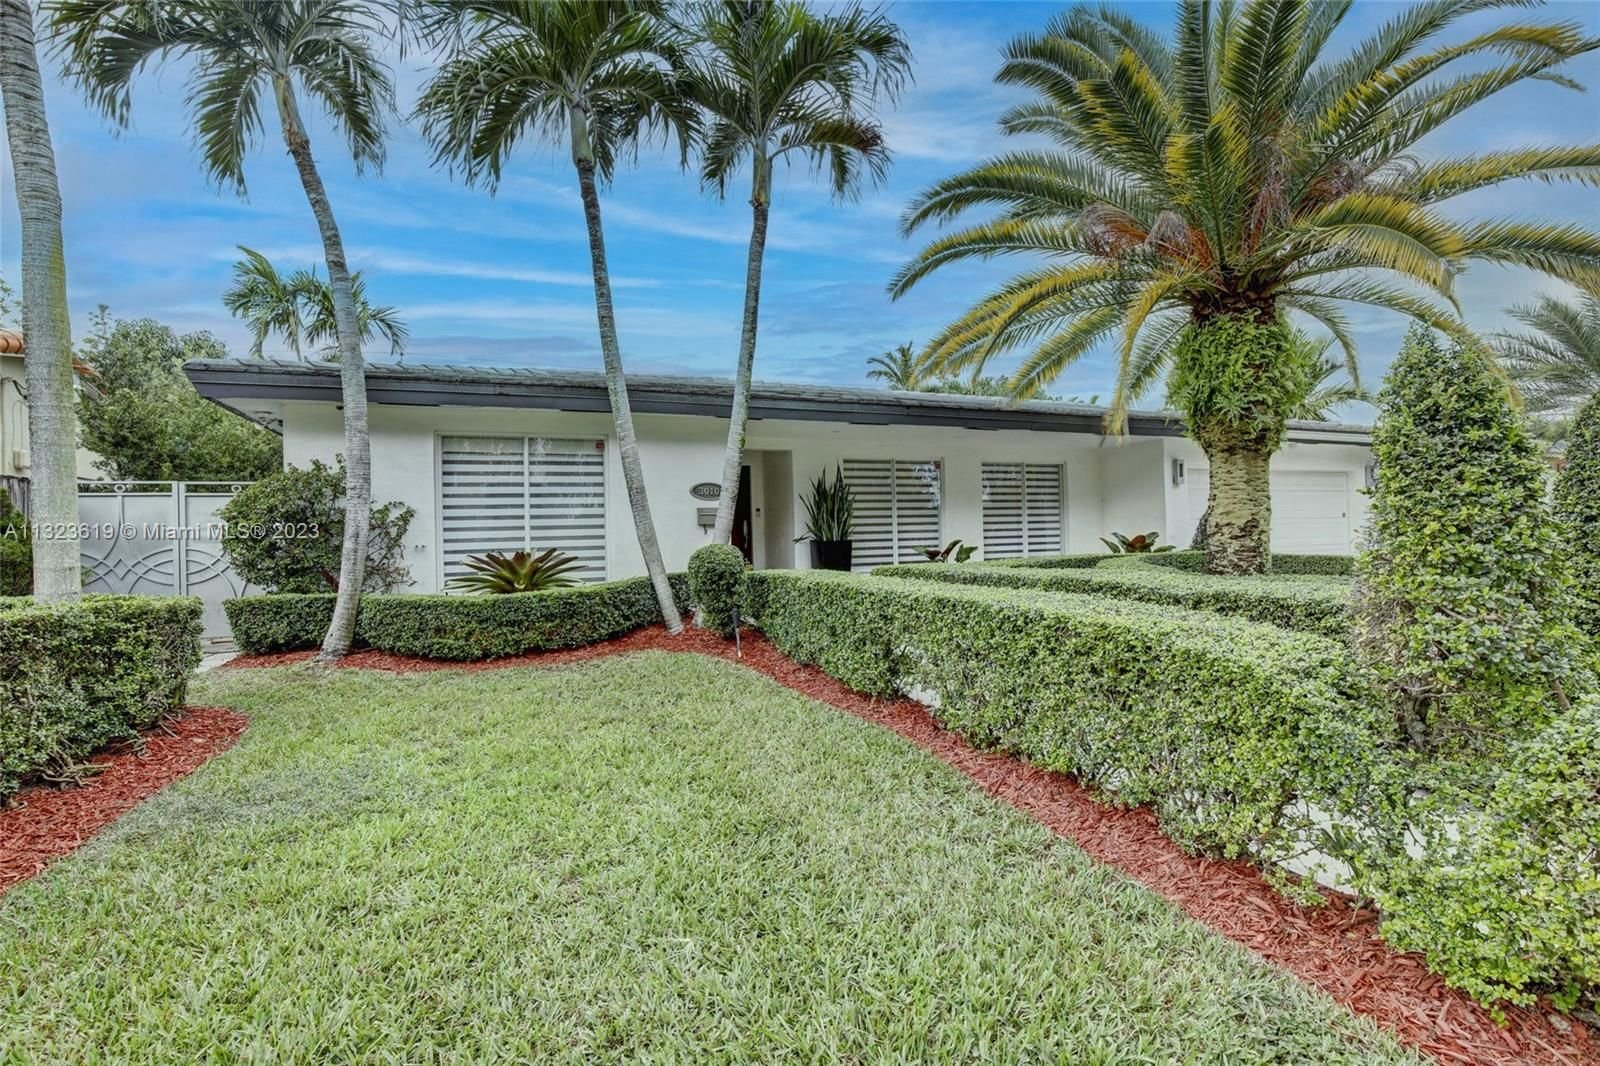 Real estate property located at 3010 77th Ct, Miami-Dade County, Miami, FL